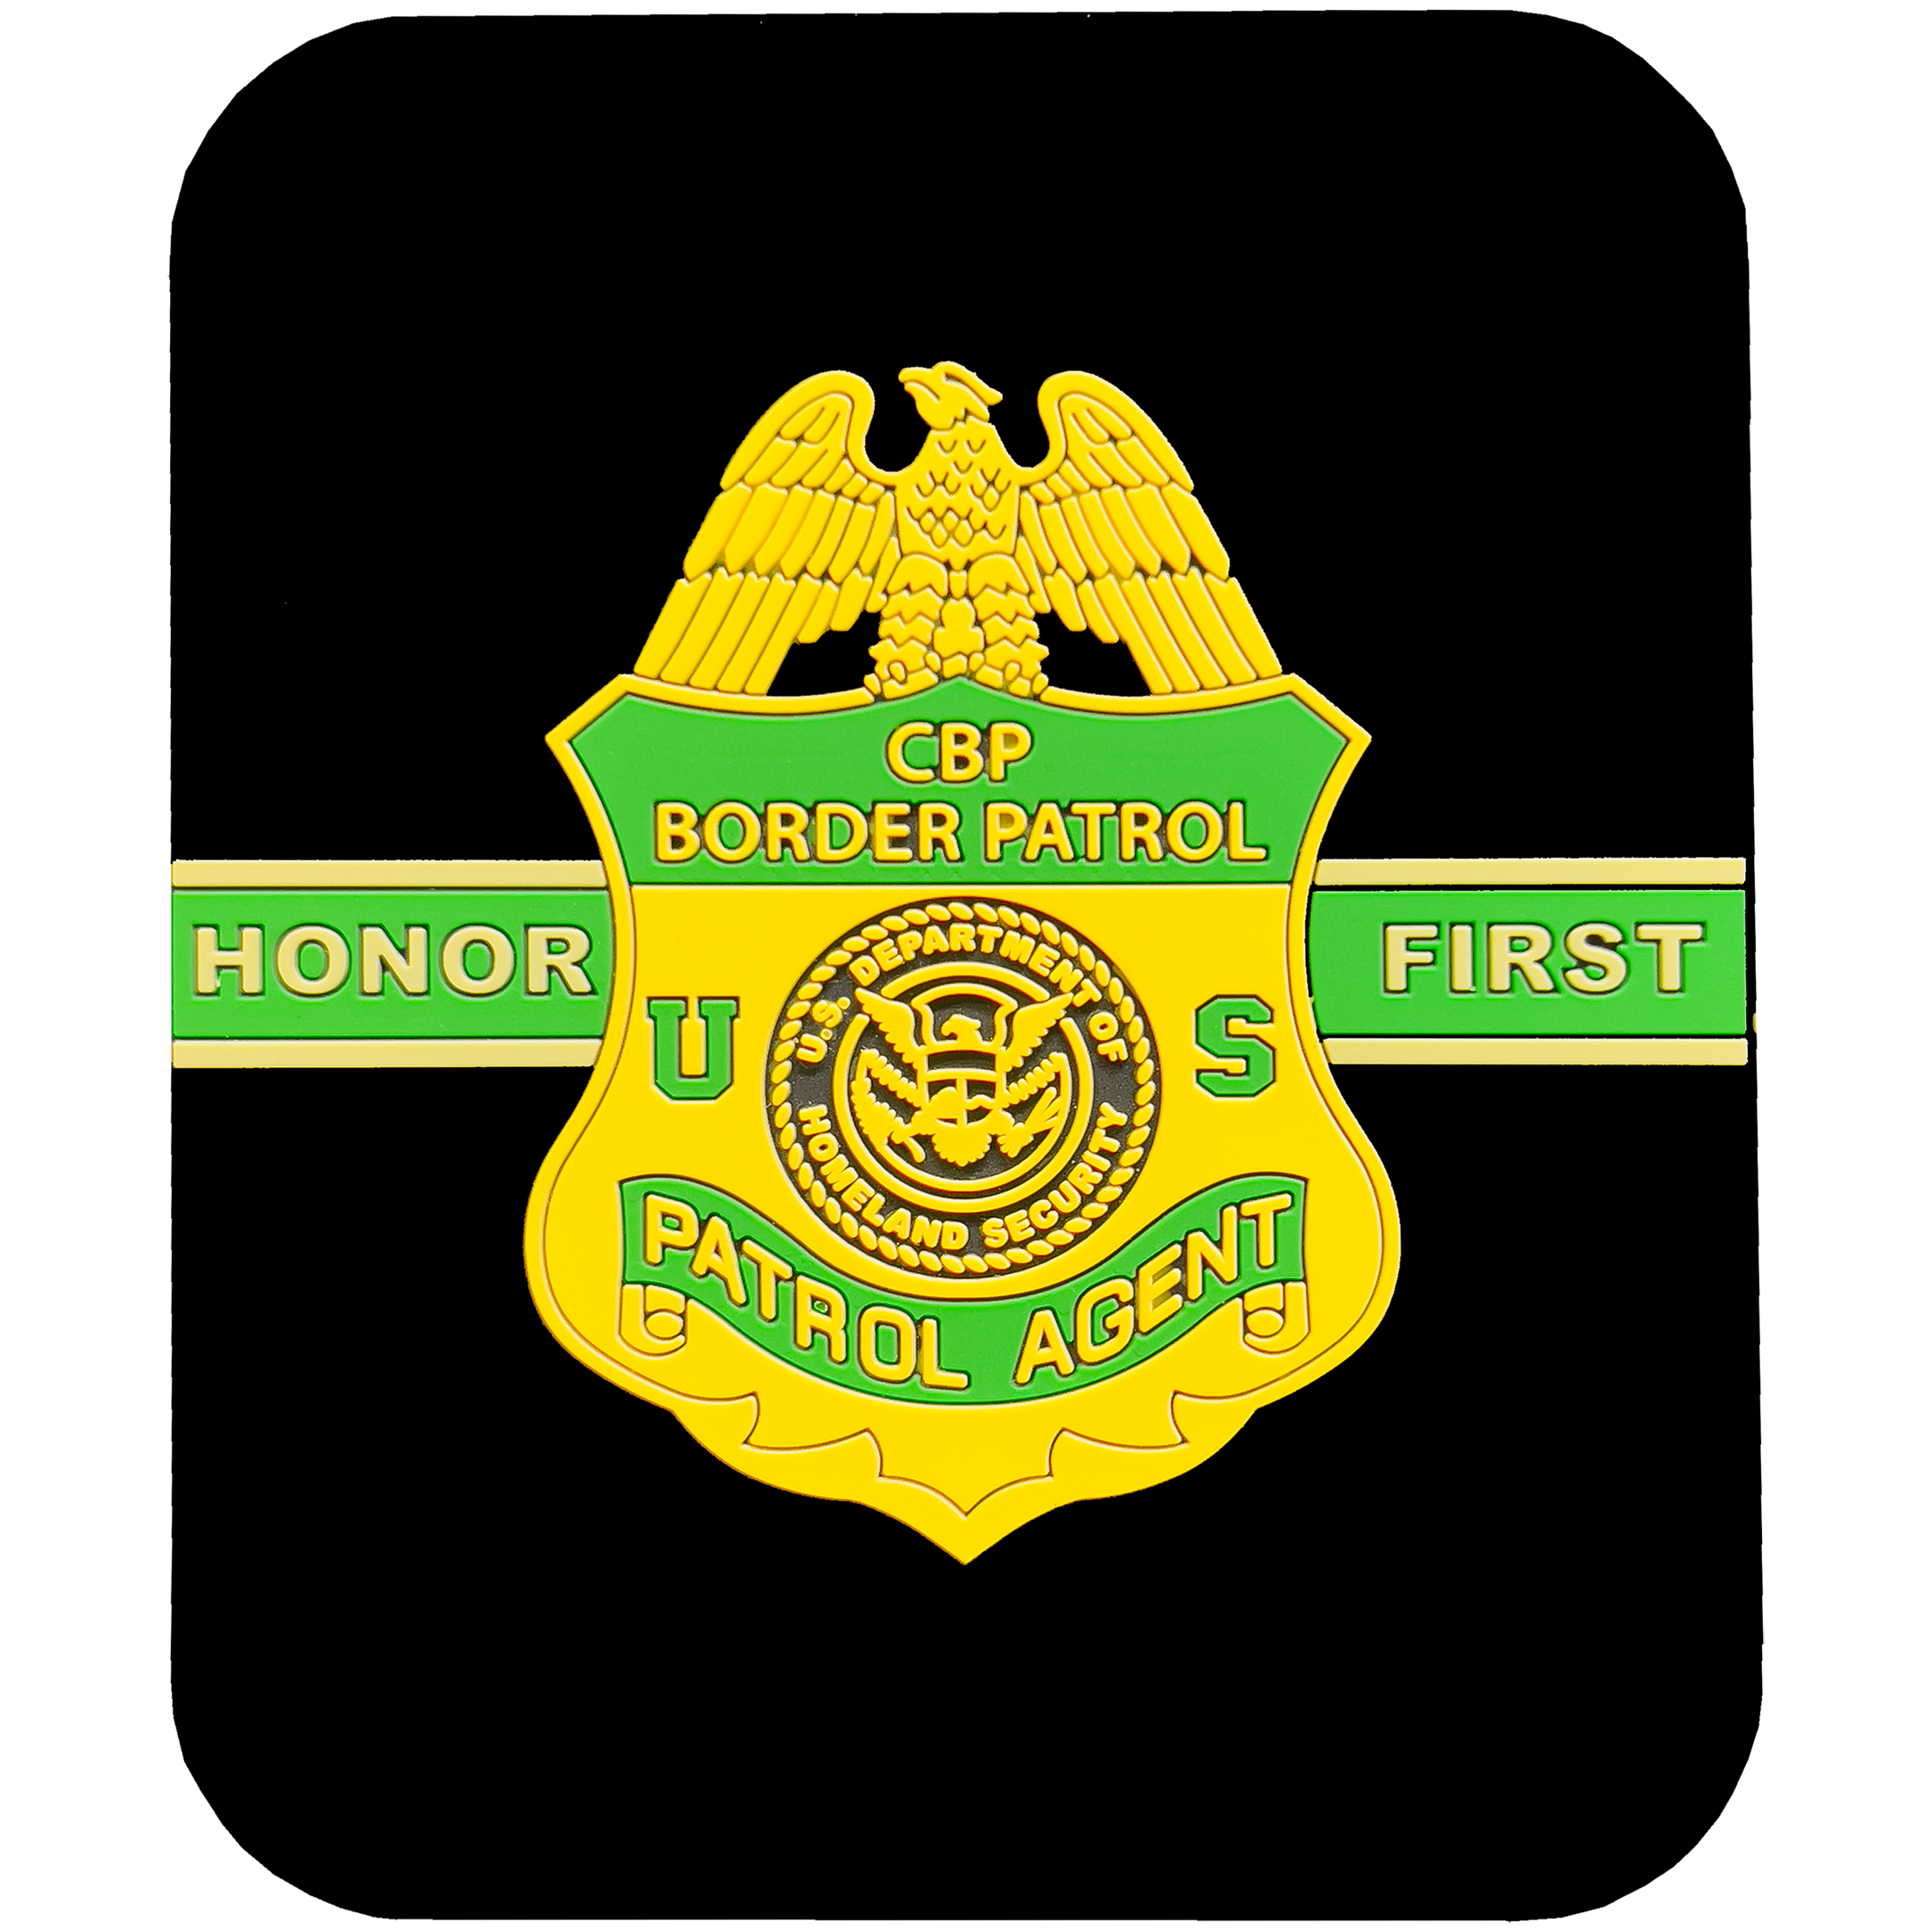 BL4-020 Border Patrol Agent Honor First silicon rubber coaster